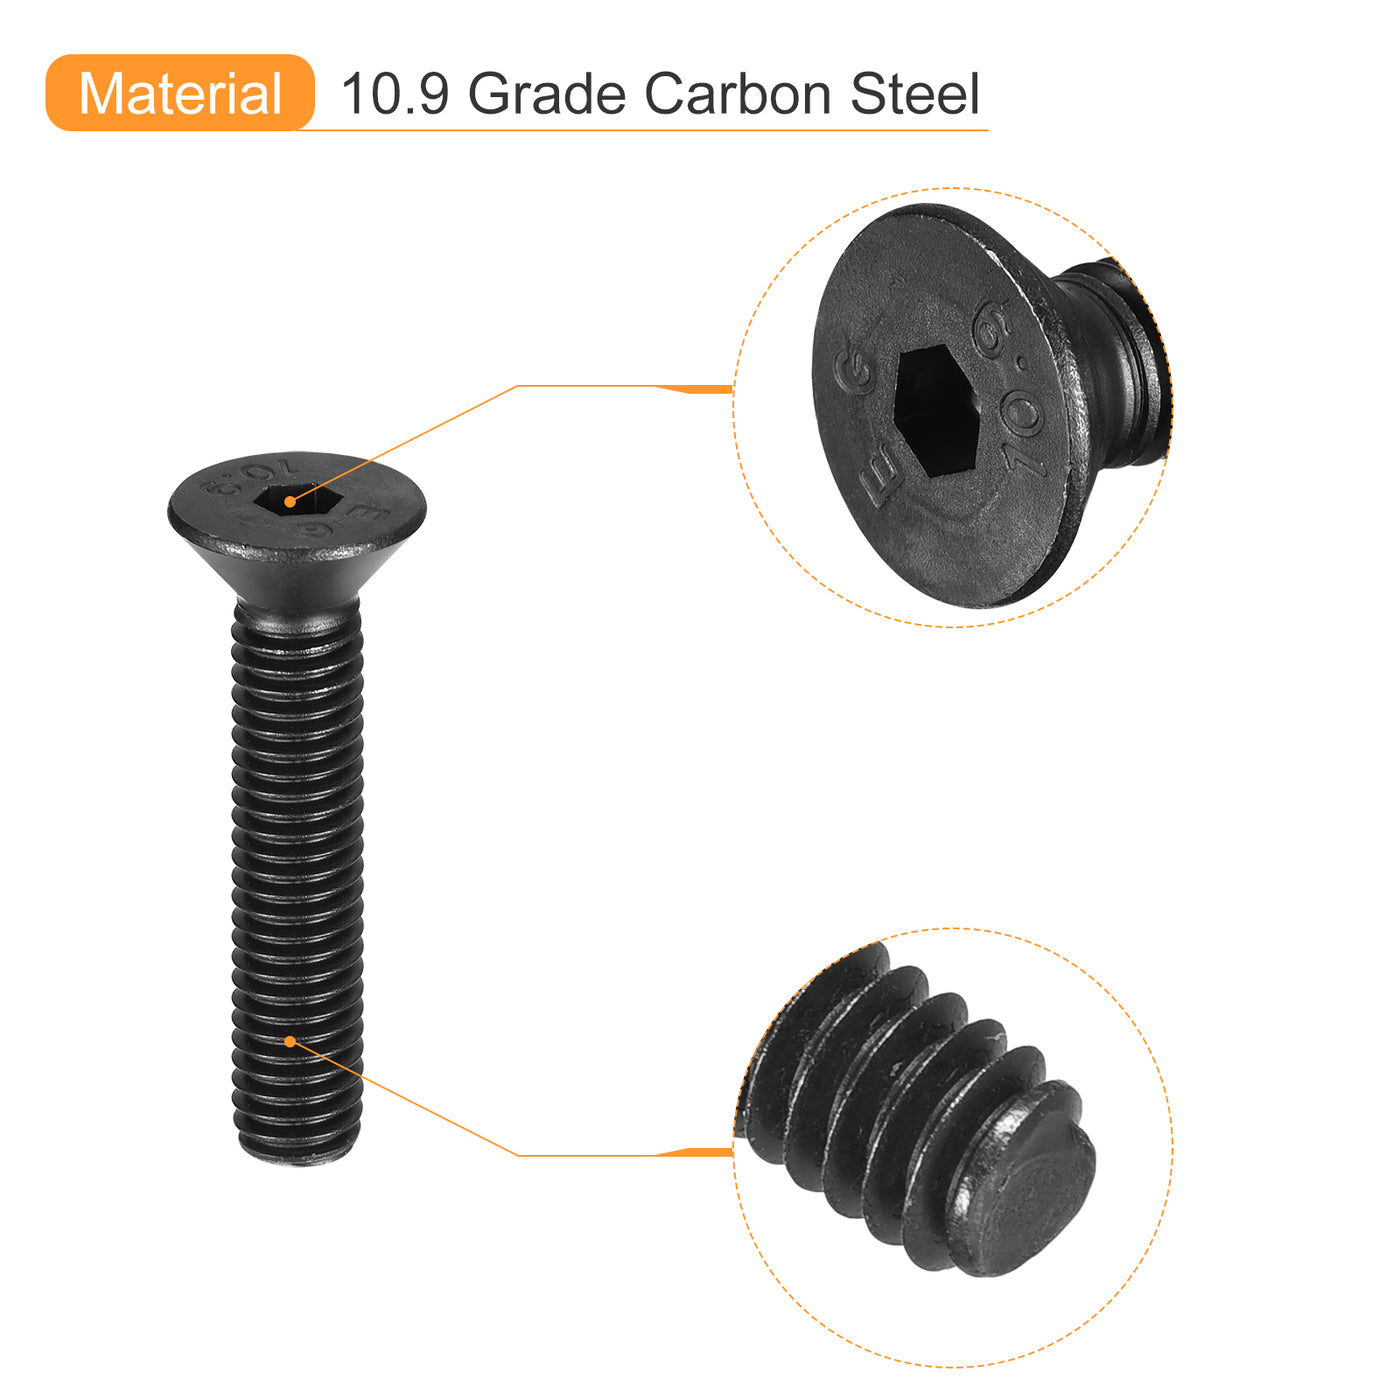 uxcell Uxcell 3/8-16x2" Flat Head Socket Cap Screws, 10.9 Grade Carbon Steel, 10PCS